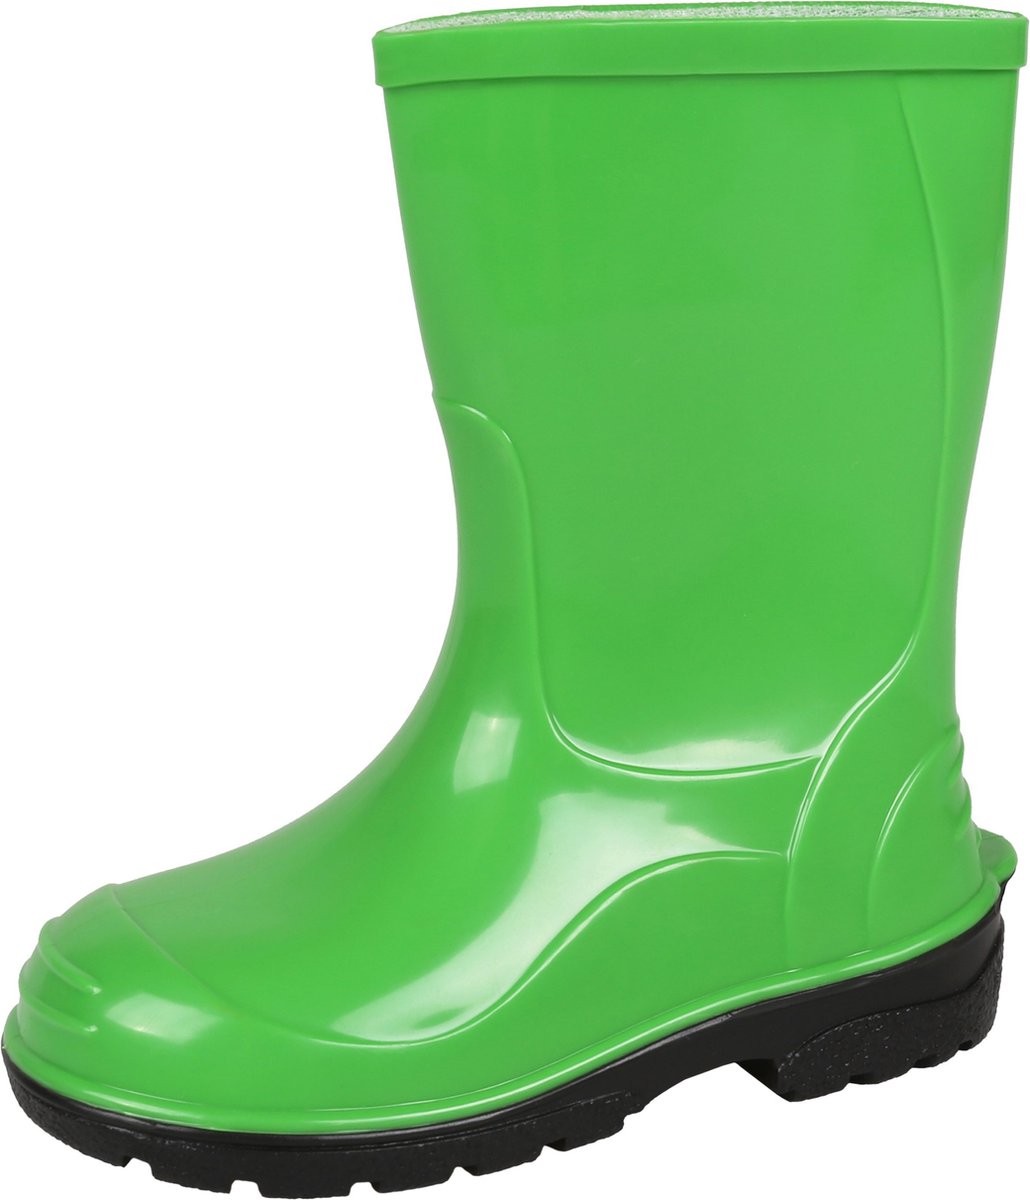 Groene laarzen van PVC materiaal, met antislipzool - OLI LEMIGO / 33